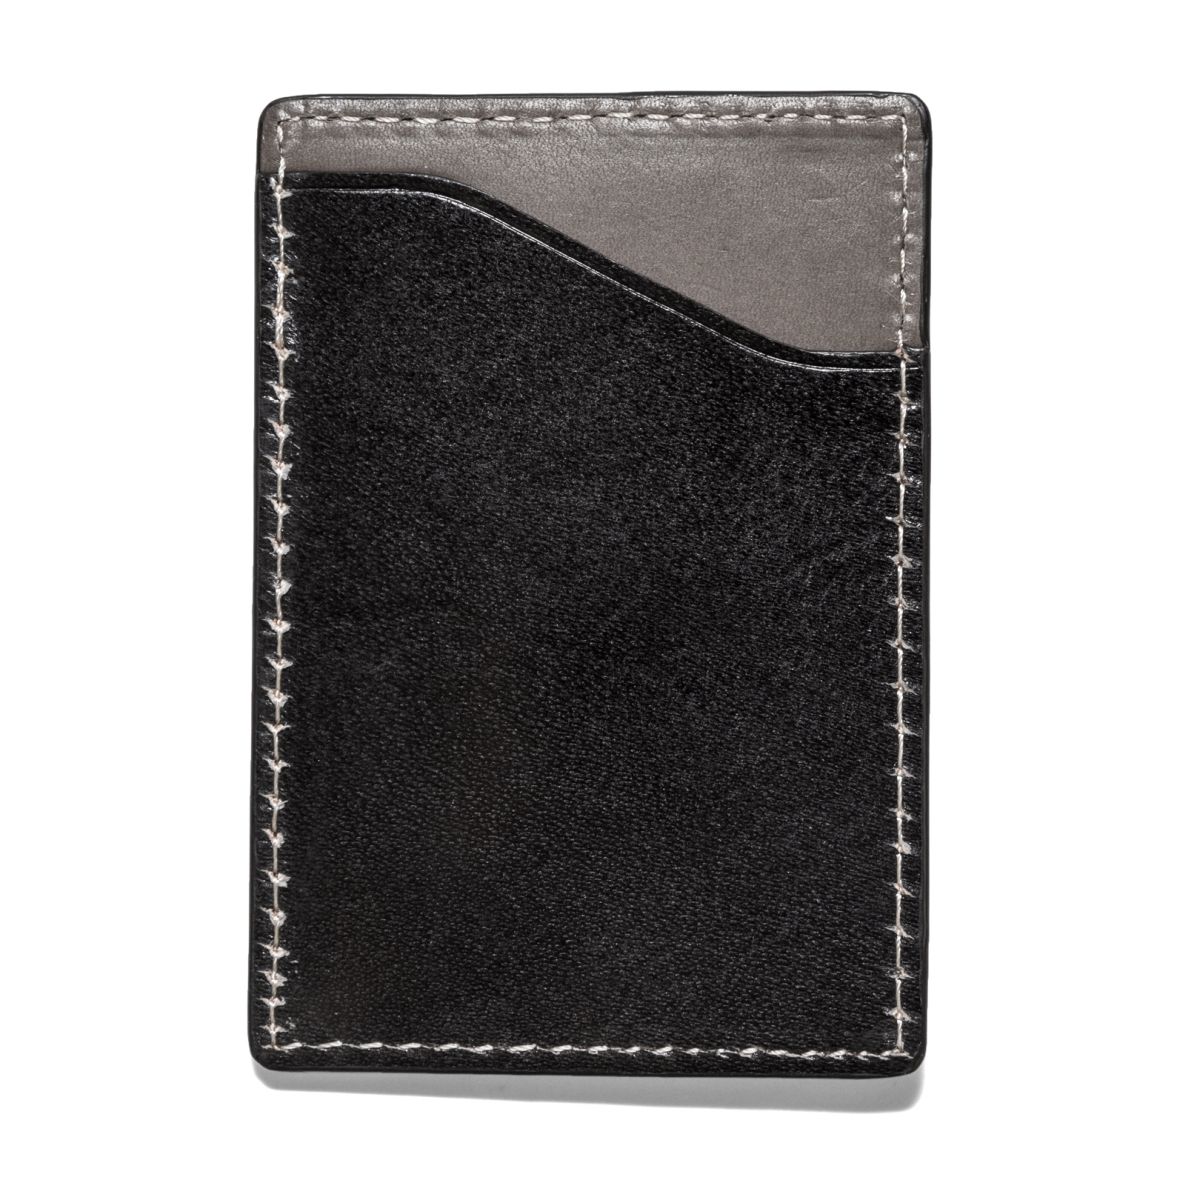 J.FOLD FLAT STASH Leather Wallet - Black